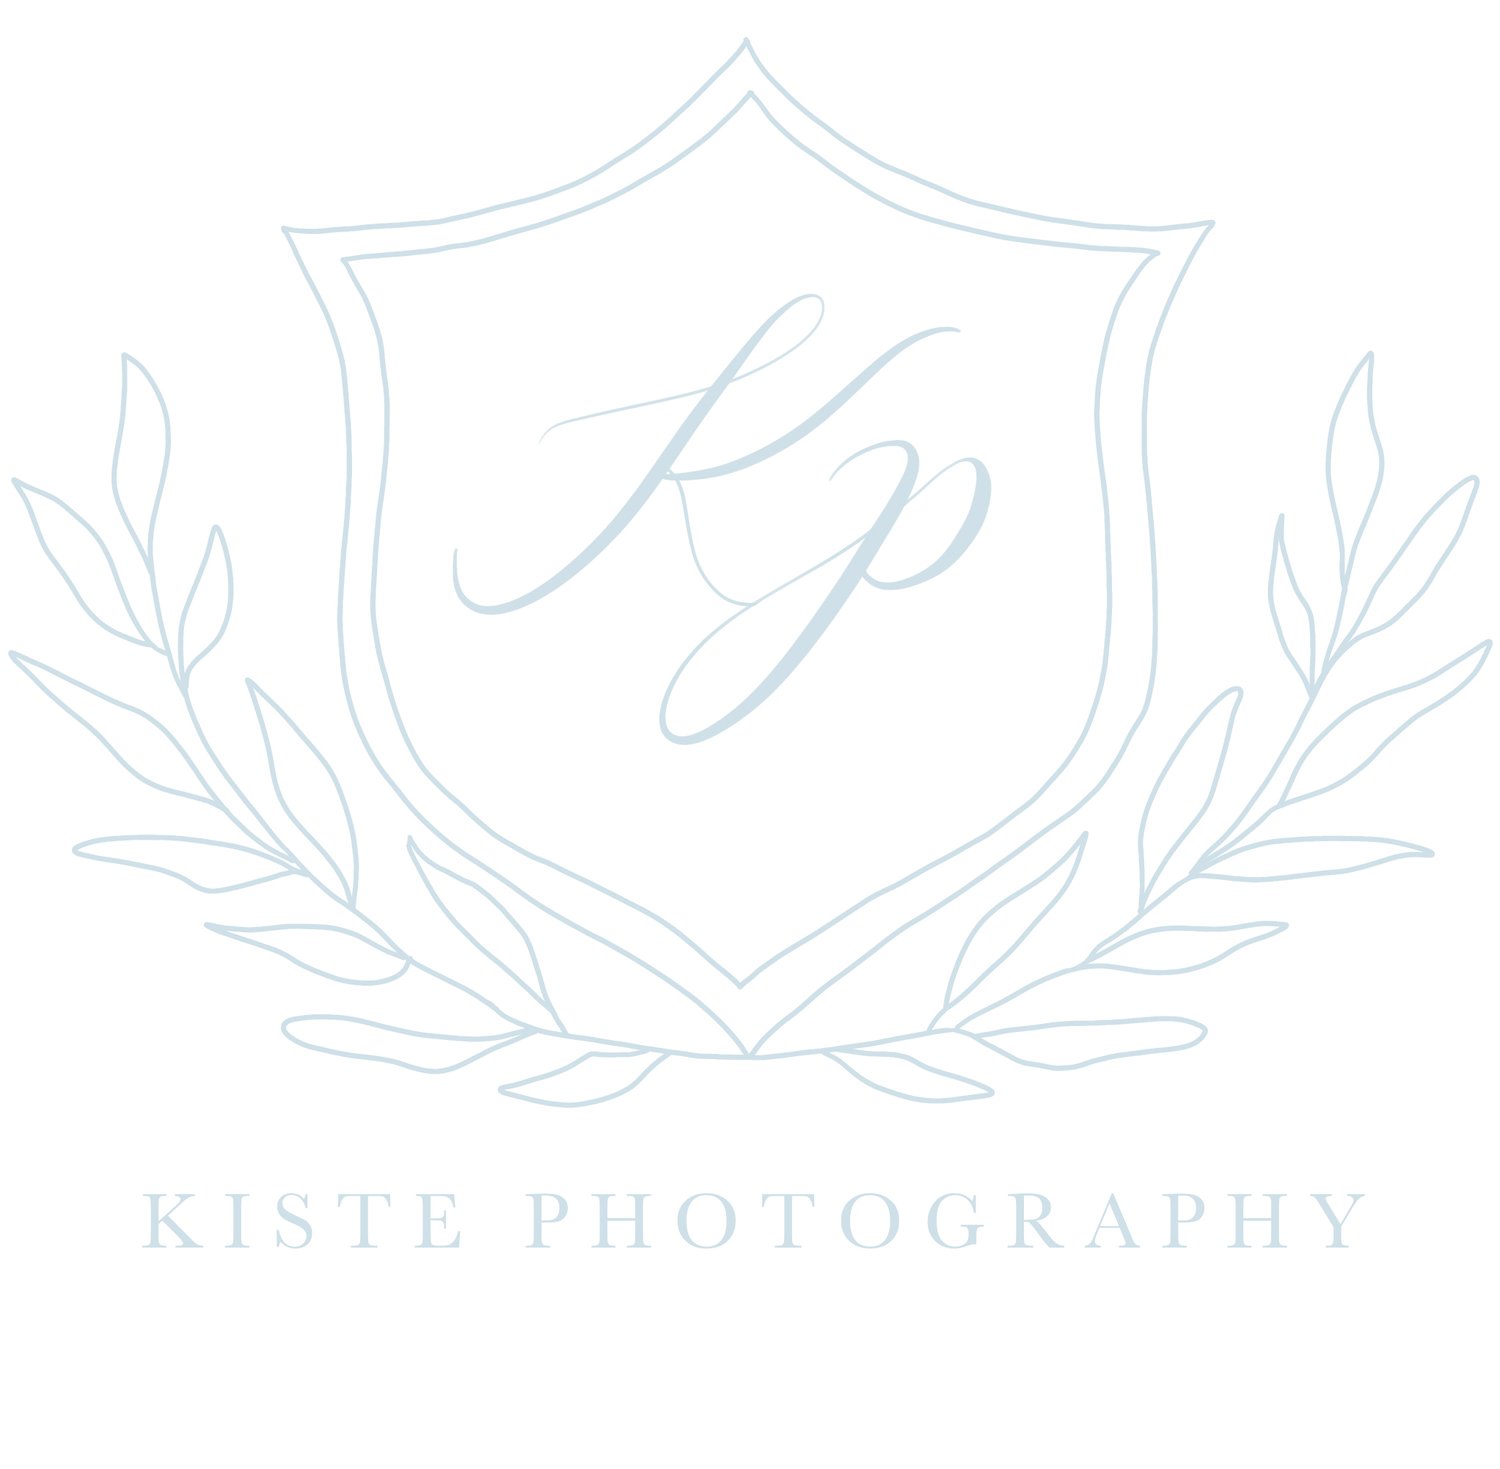 Kiste Photography